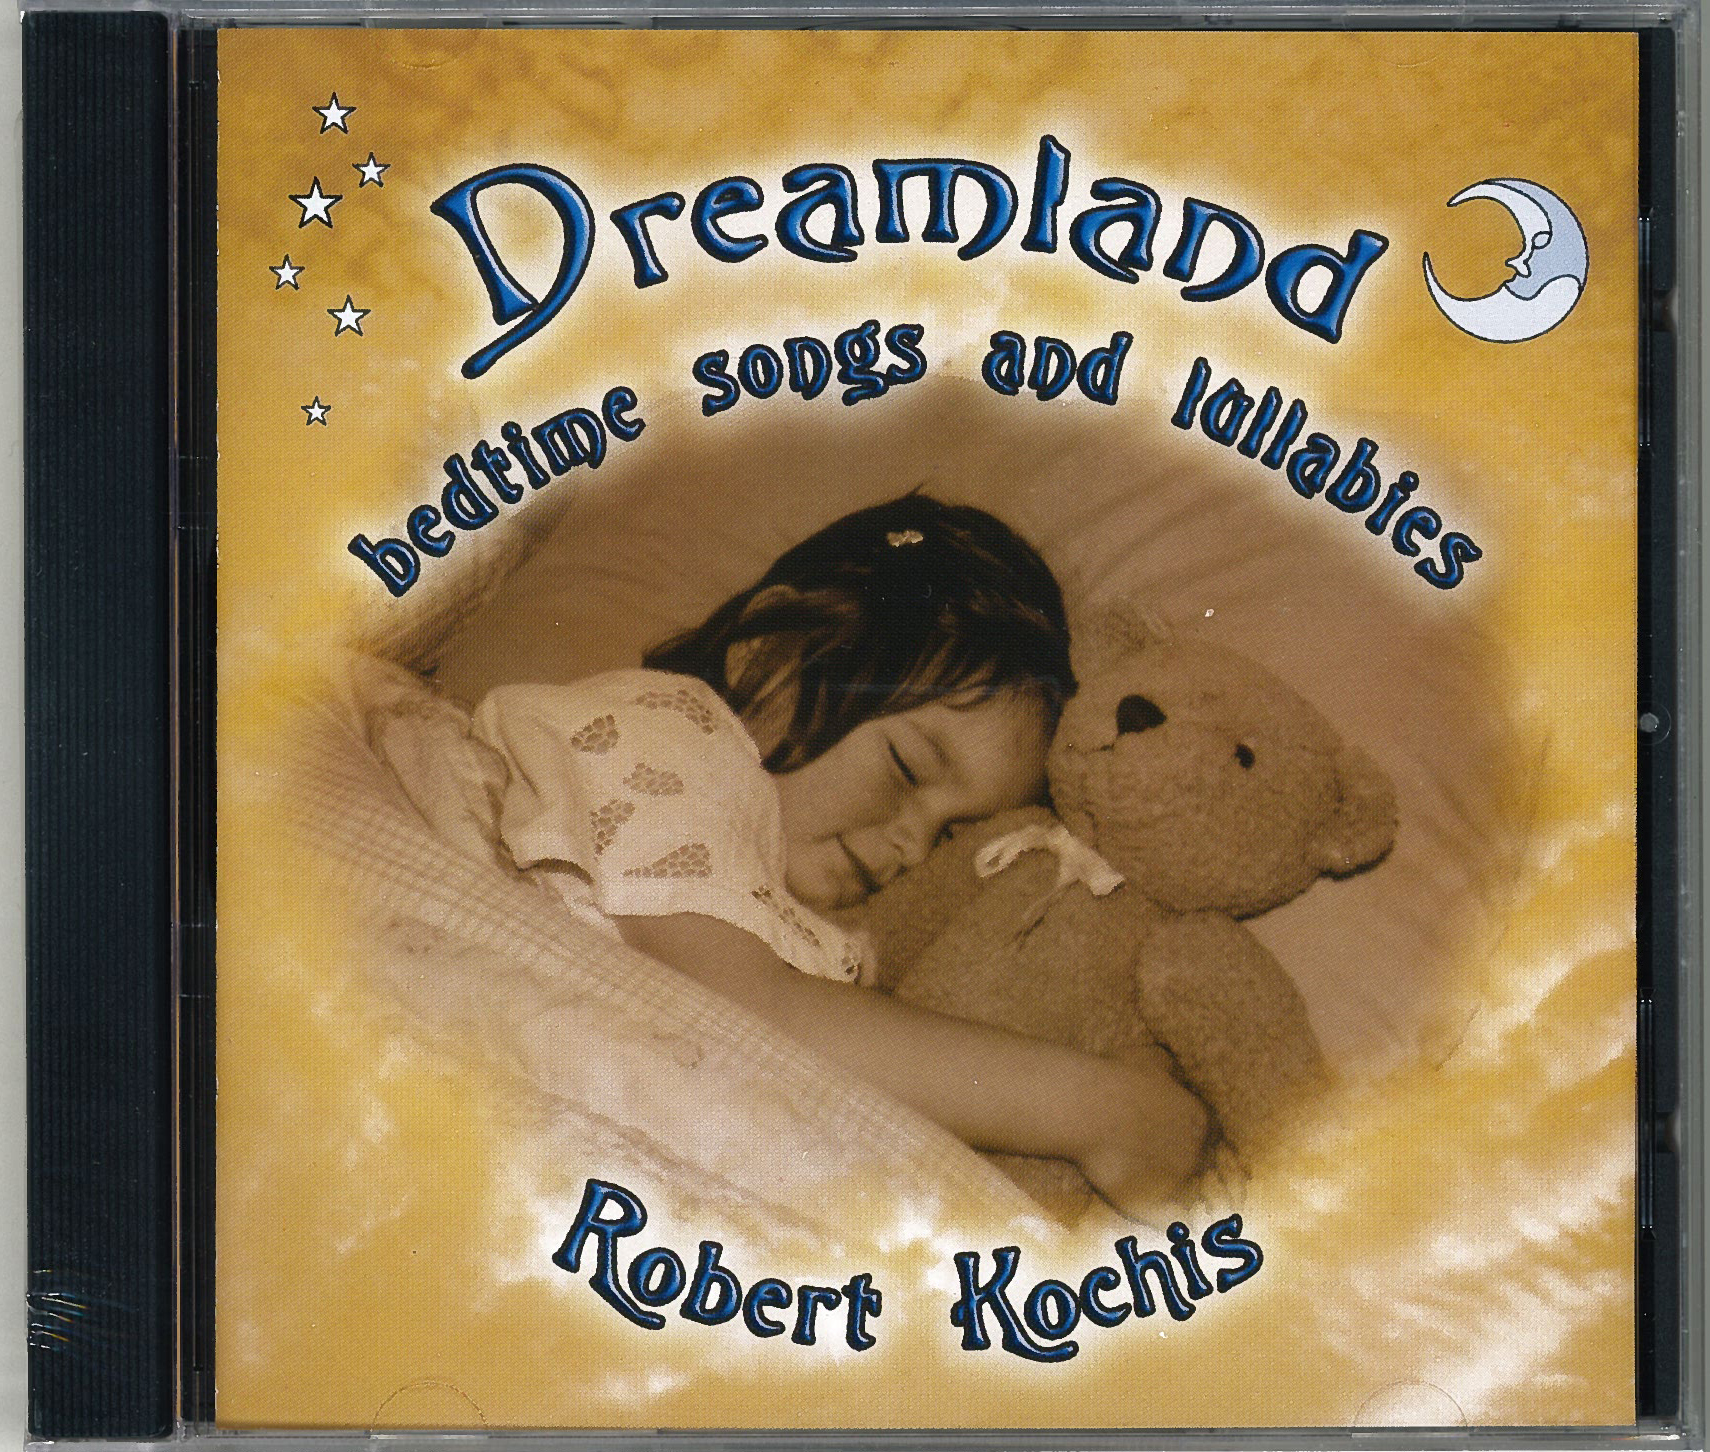 Dreamland: Bedtime Songs and Lullabies by Robert Kochis 88-5911011032